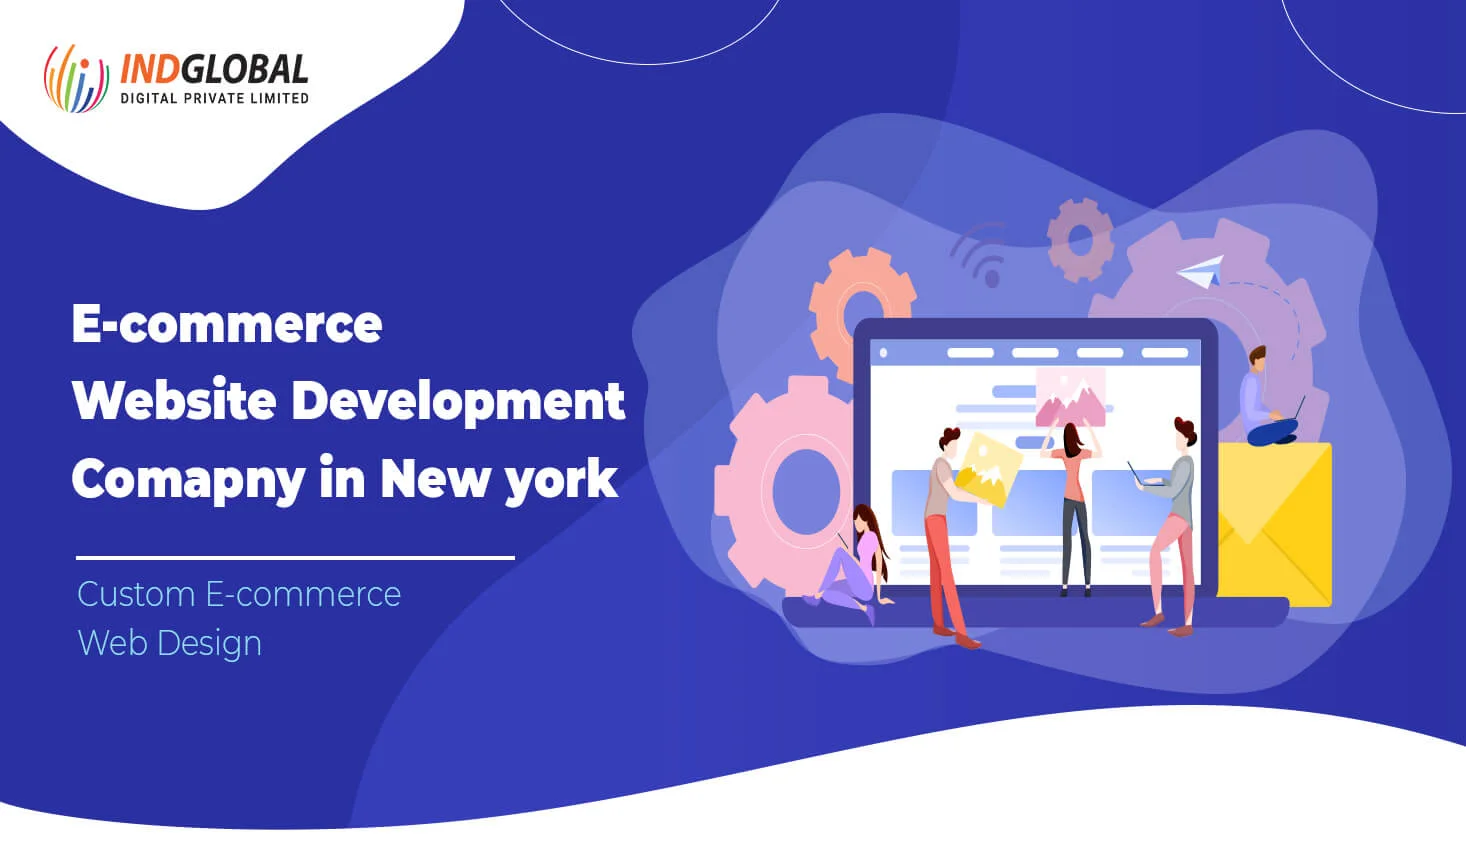 E-commerce Website Development Company in New York